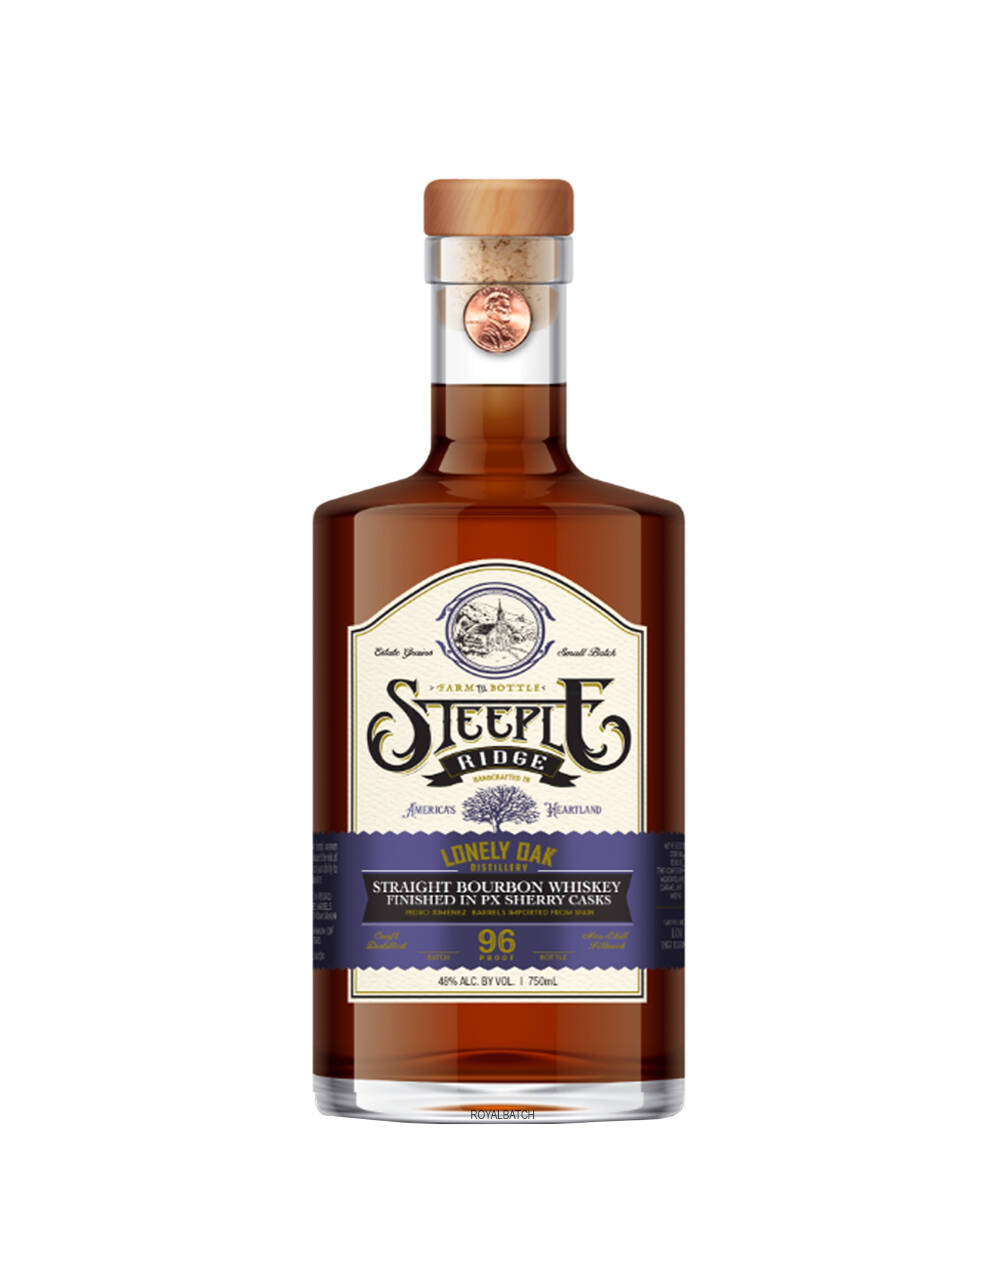 Lonely Oak Steeple Ridge Finished in PX Sherry Casks Straight Bourbon Whiskey